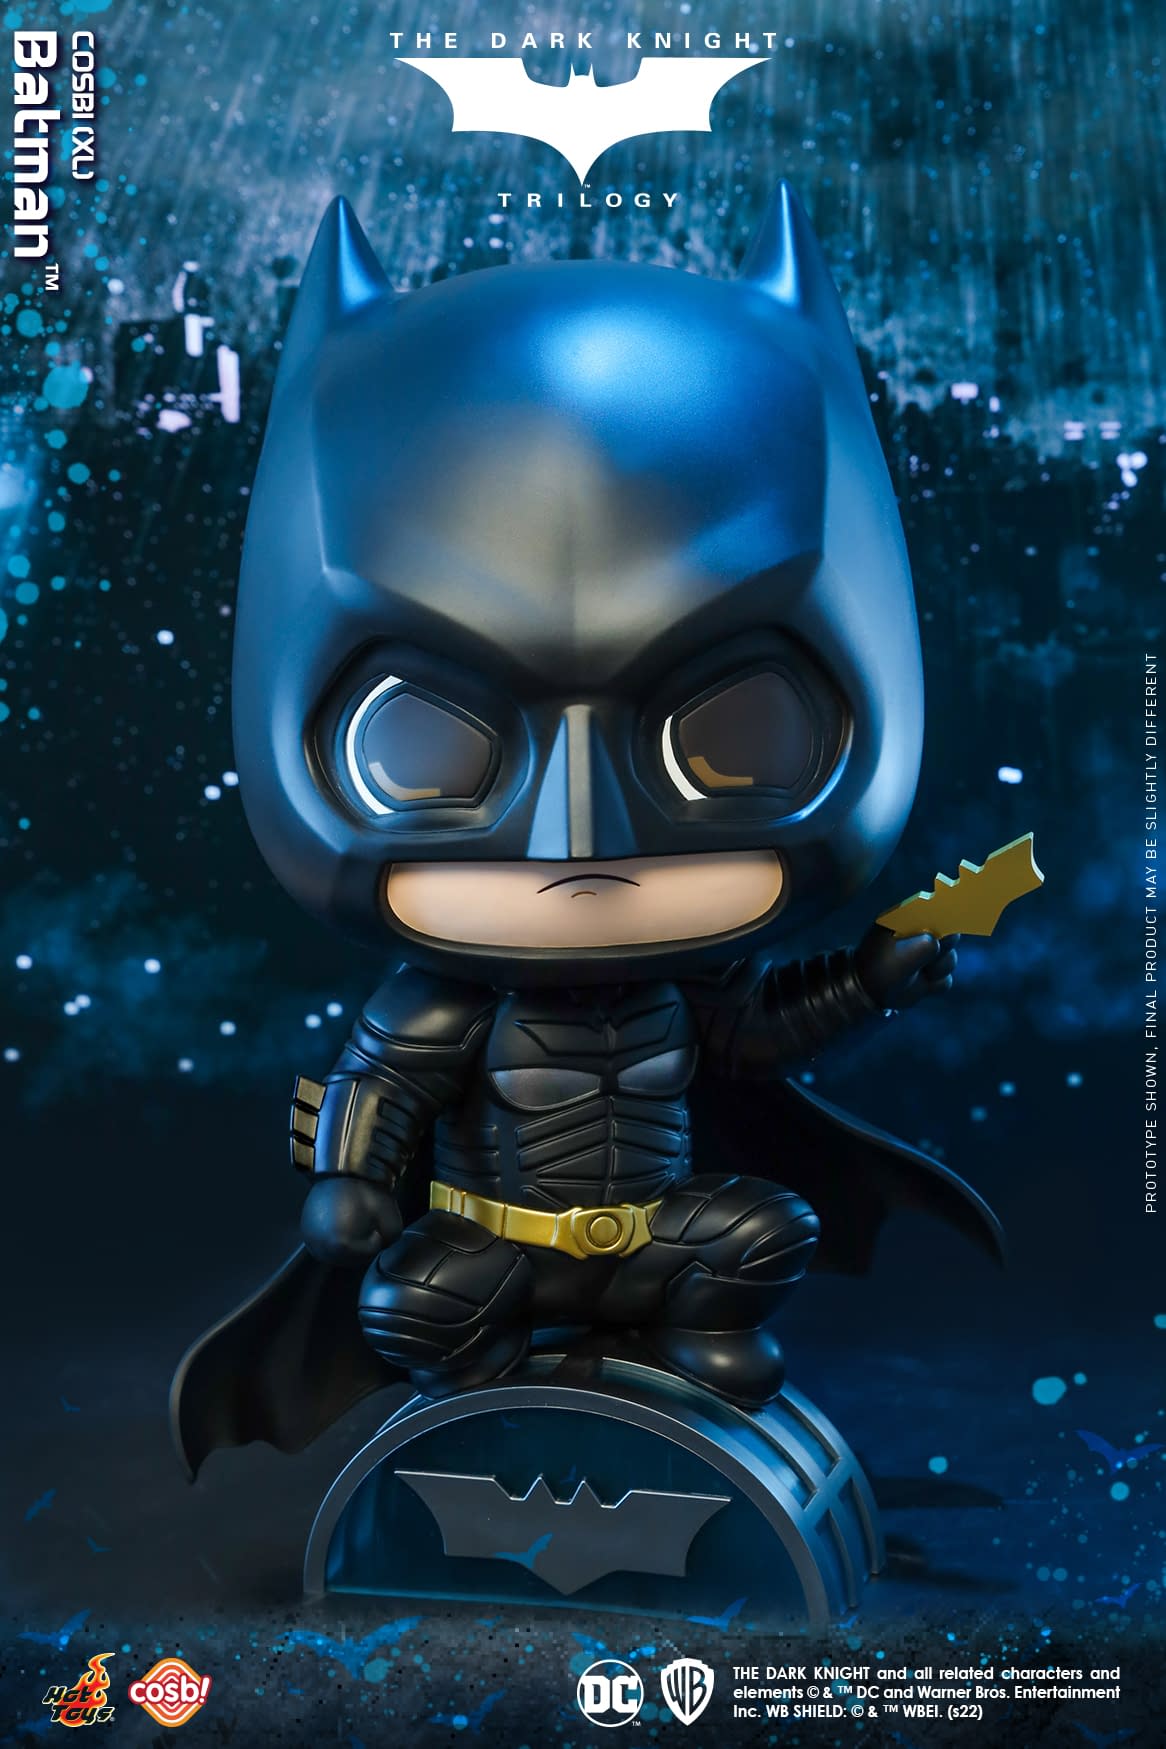 Hot Toys The Dark Knight Trilogy Batman XL Cosbi Figure